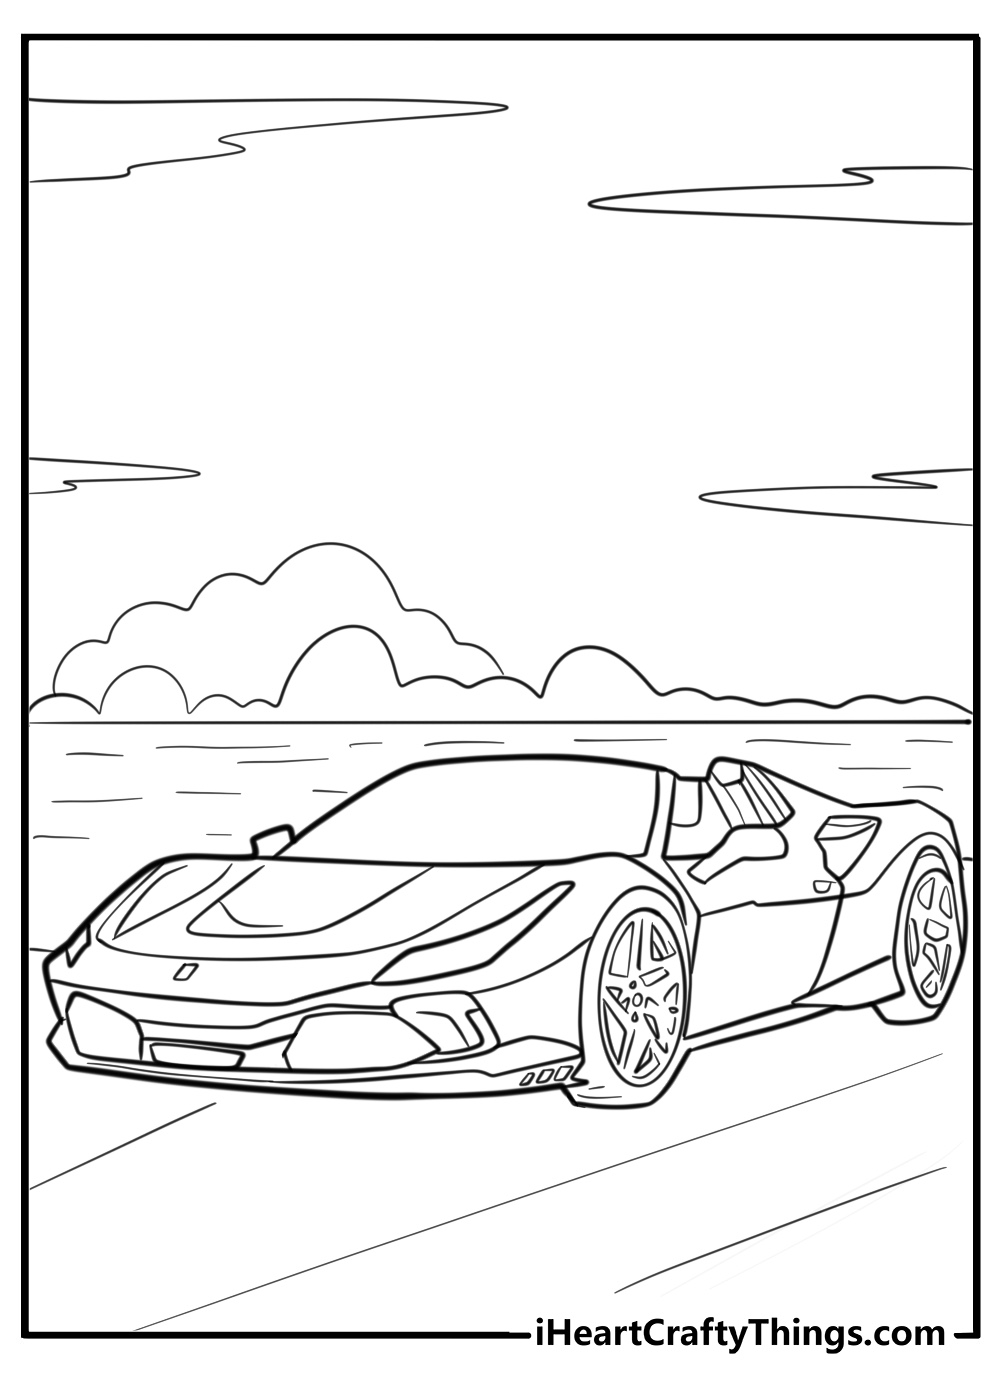 Ferrari f8 spider race car coloring sheet